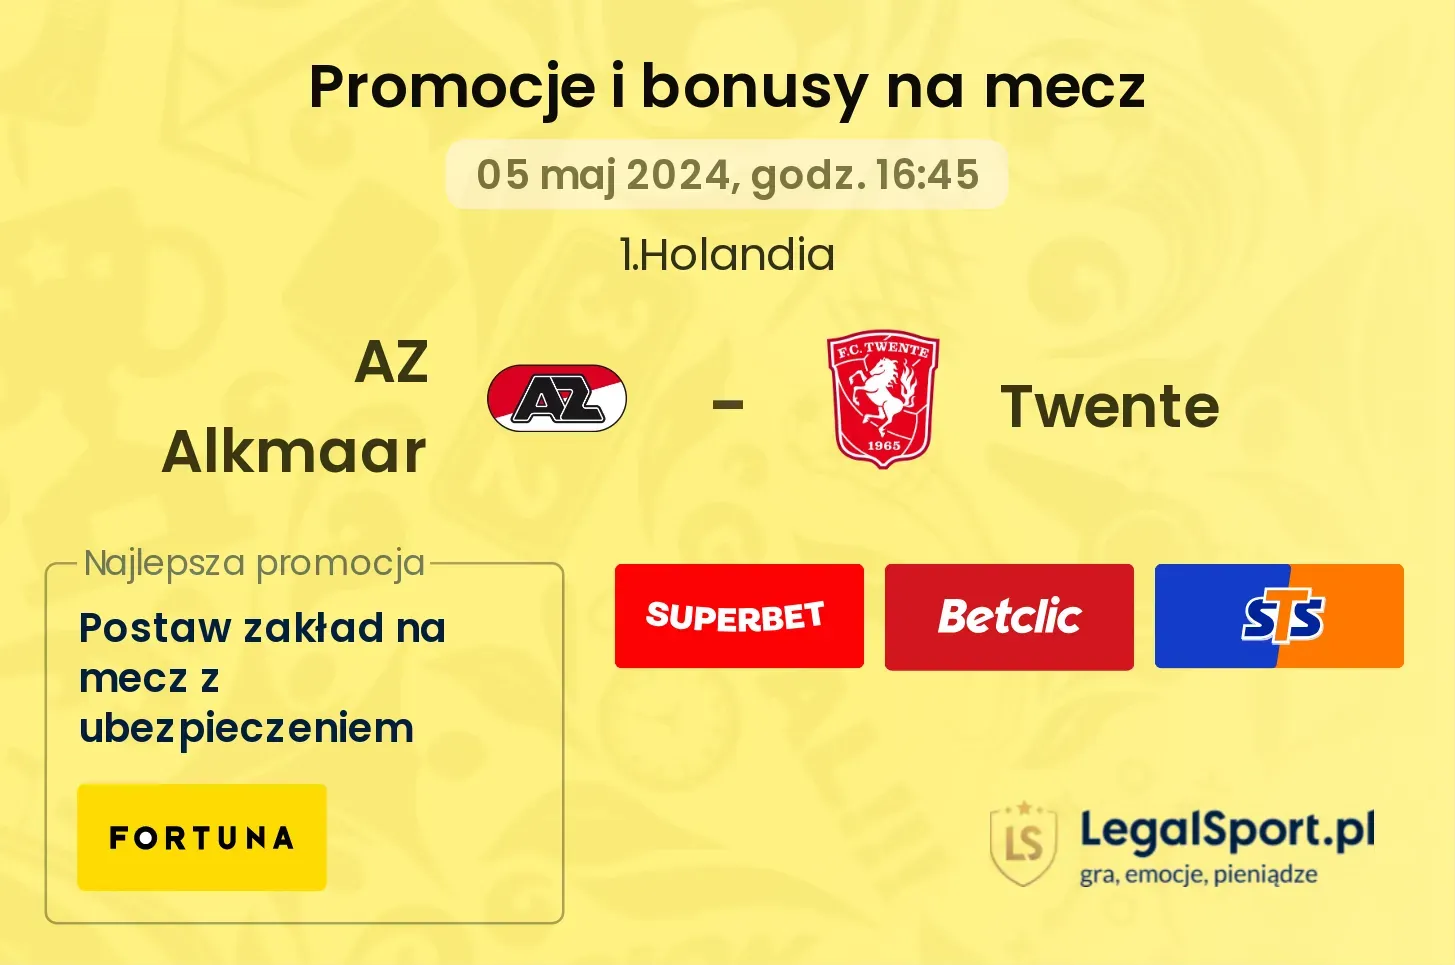 AZ Alkmaar - Twente promocje bonusy na mecz